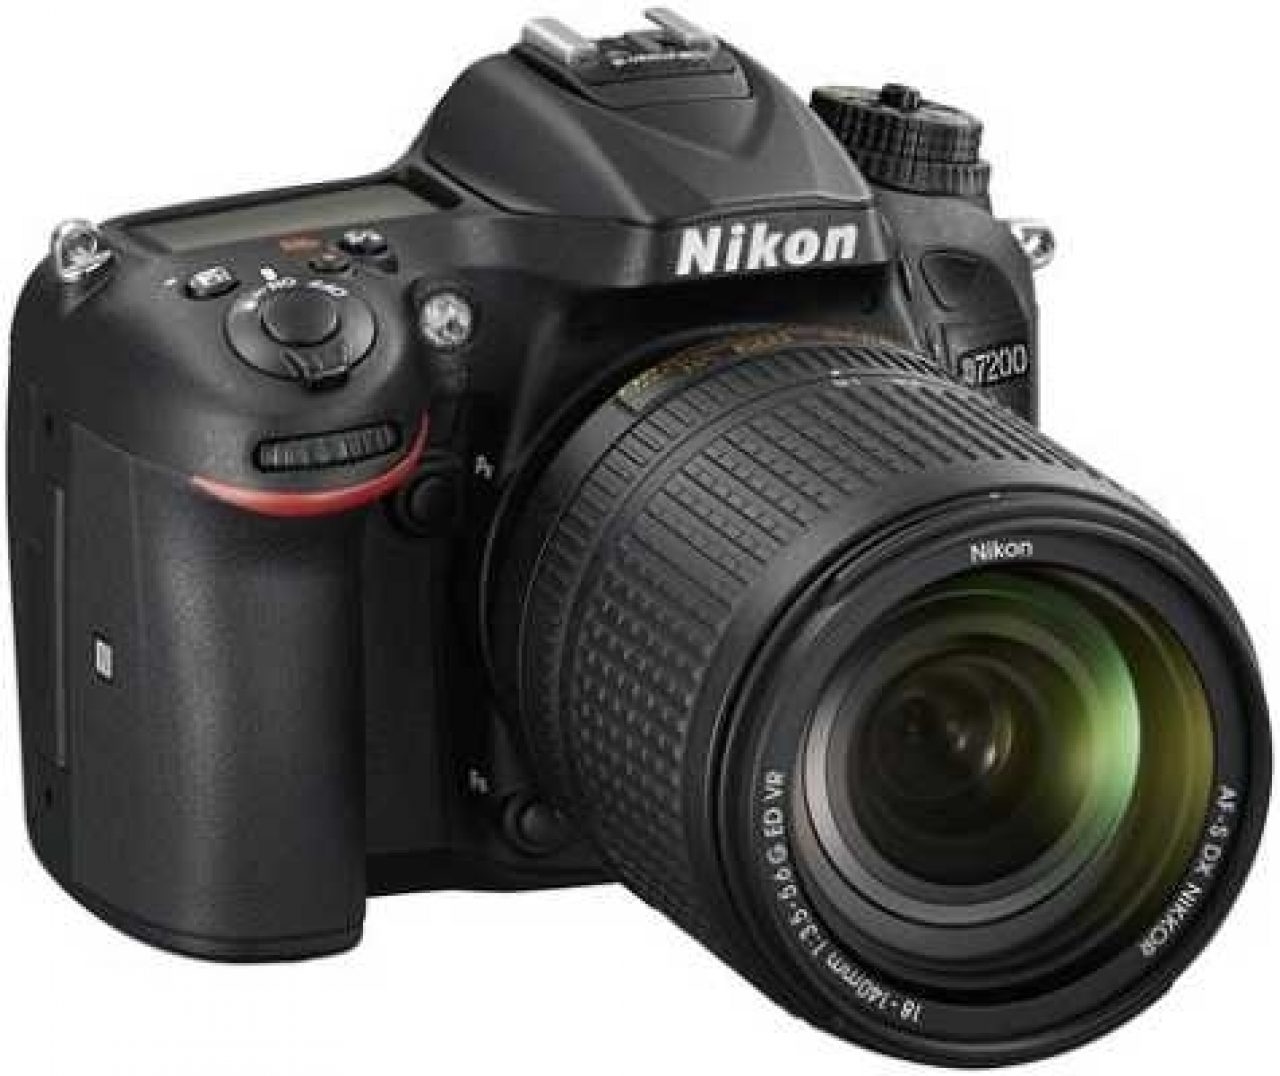 Nikon D7200 Review | Photography Blog